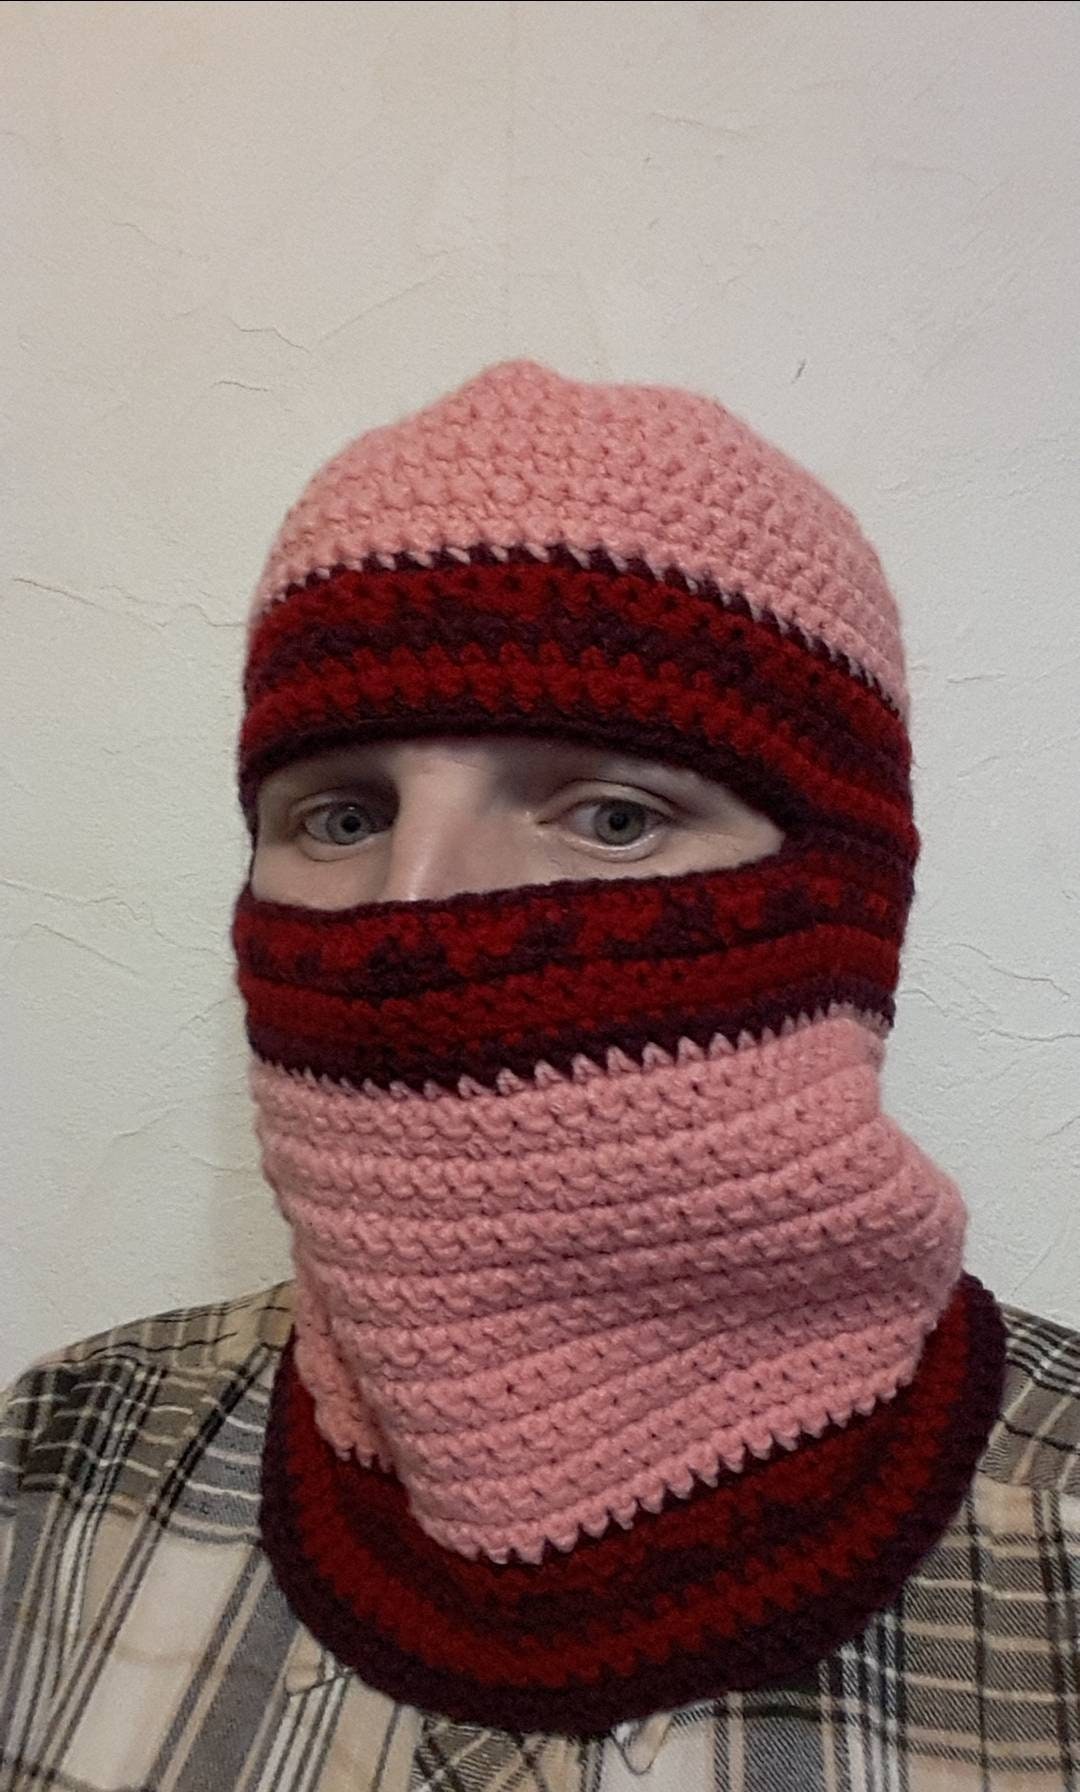 New Handknit Crocheted Wool Blend Winter Balaclava Face Mask Hat Helmet Ski Mask, Women Balaclava, Made To Order